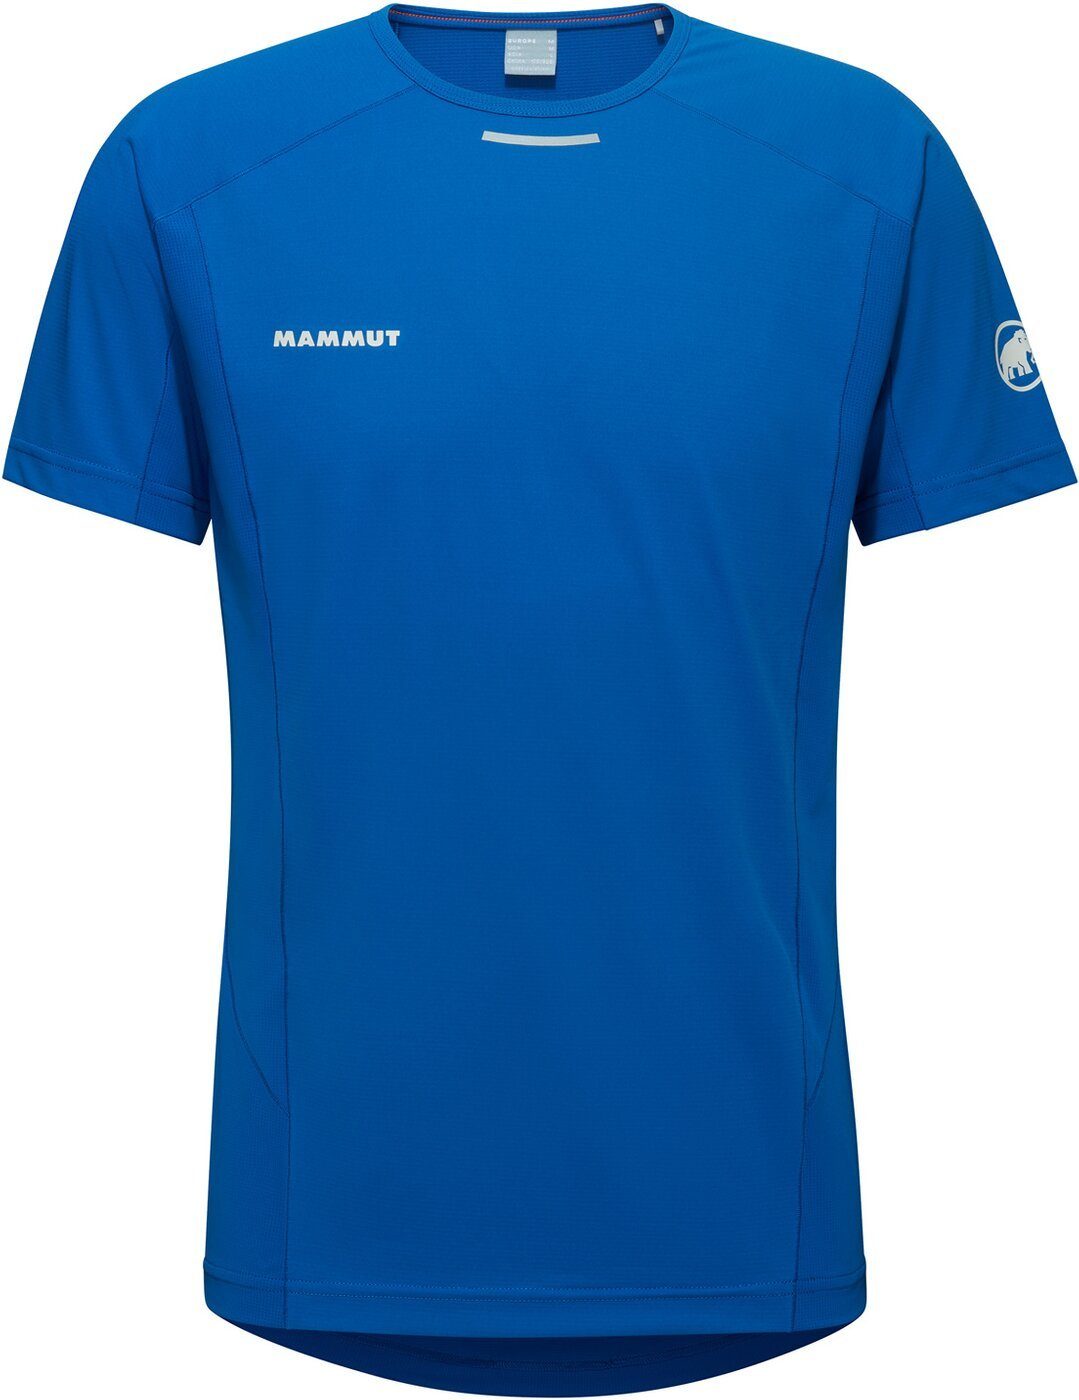 Men Aenergy Herren blau Mammut FL Funktions-T-Shirt Funktionsshirt